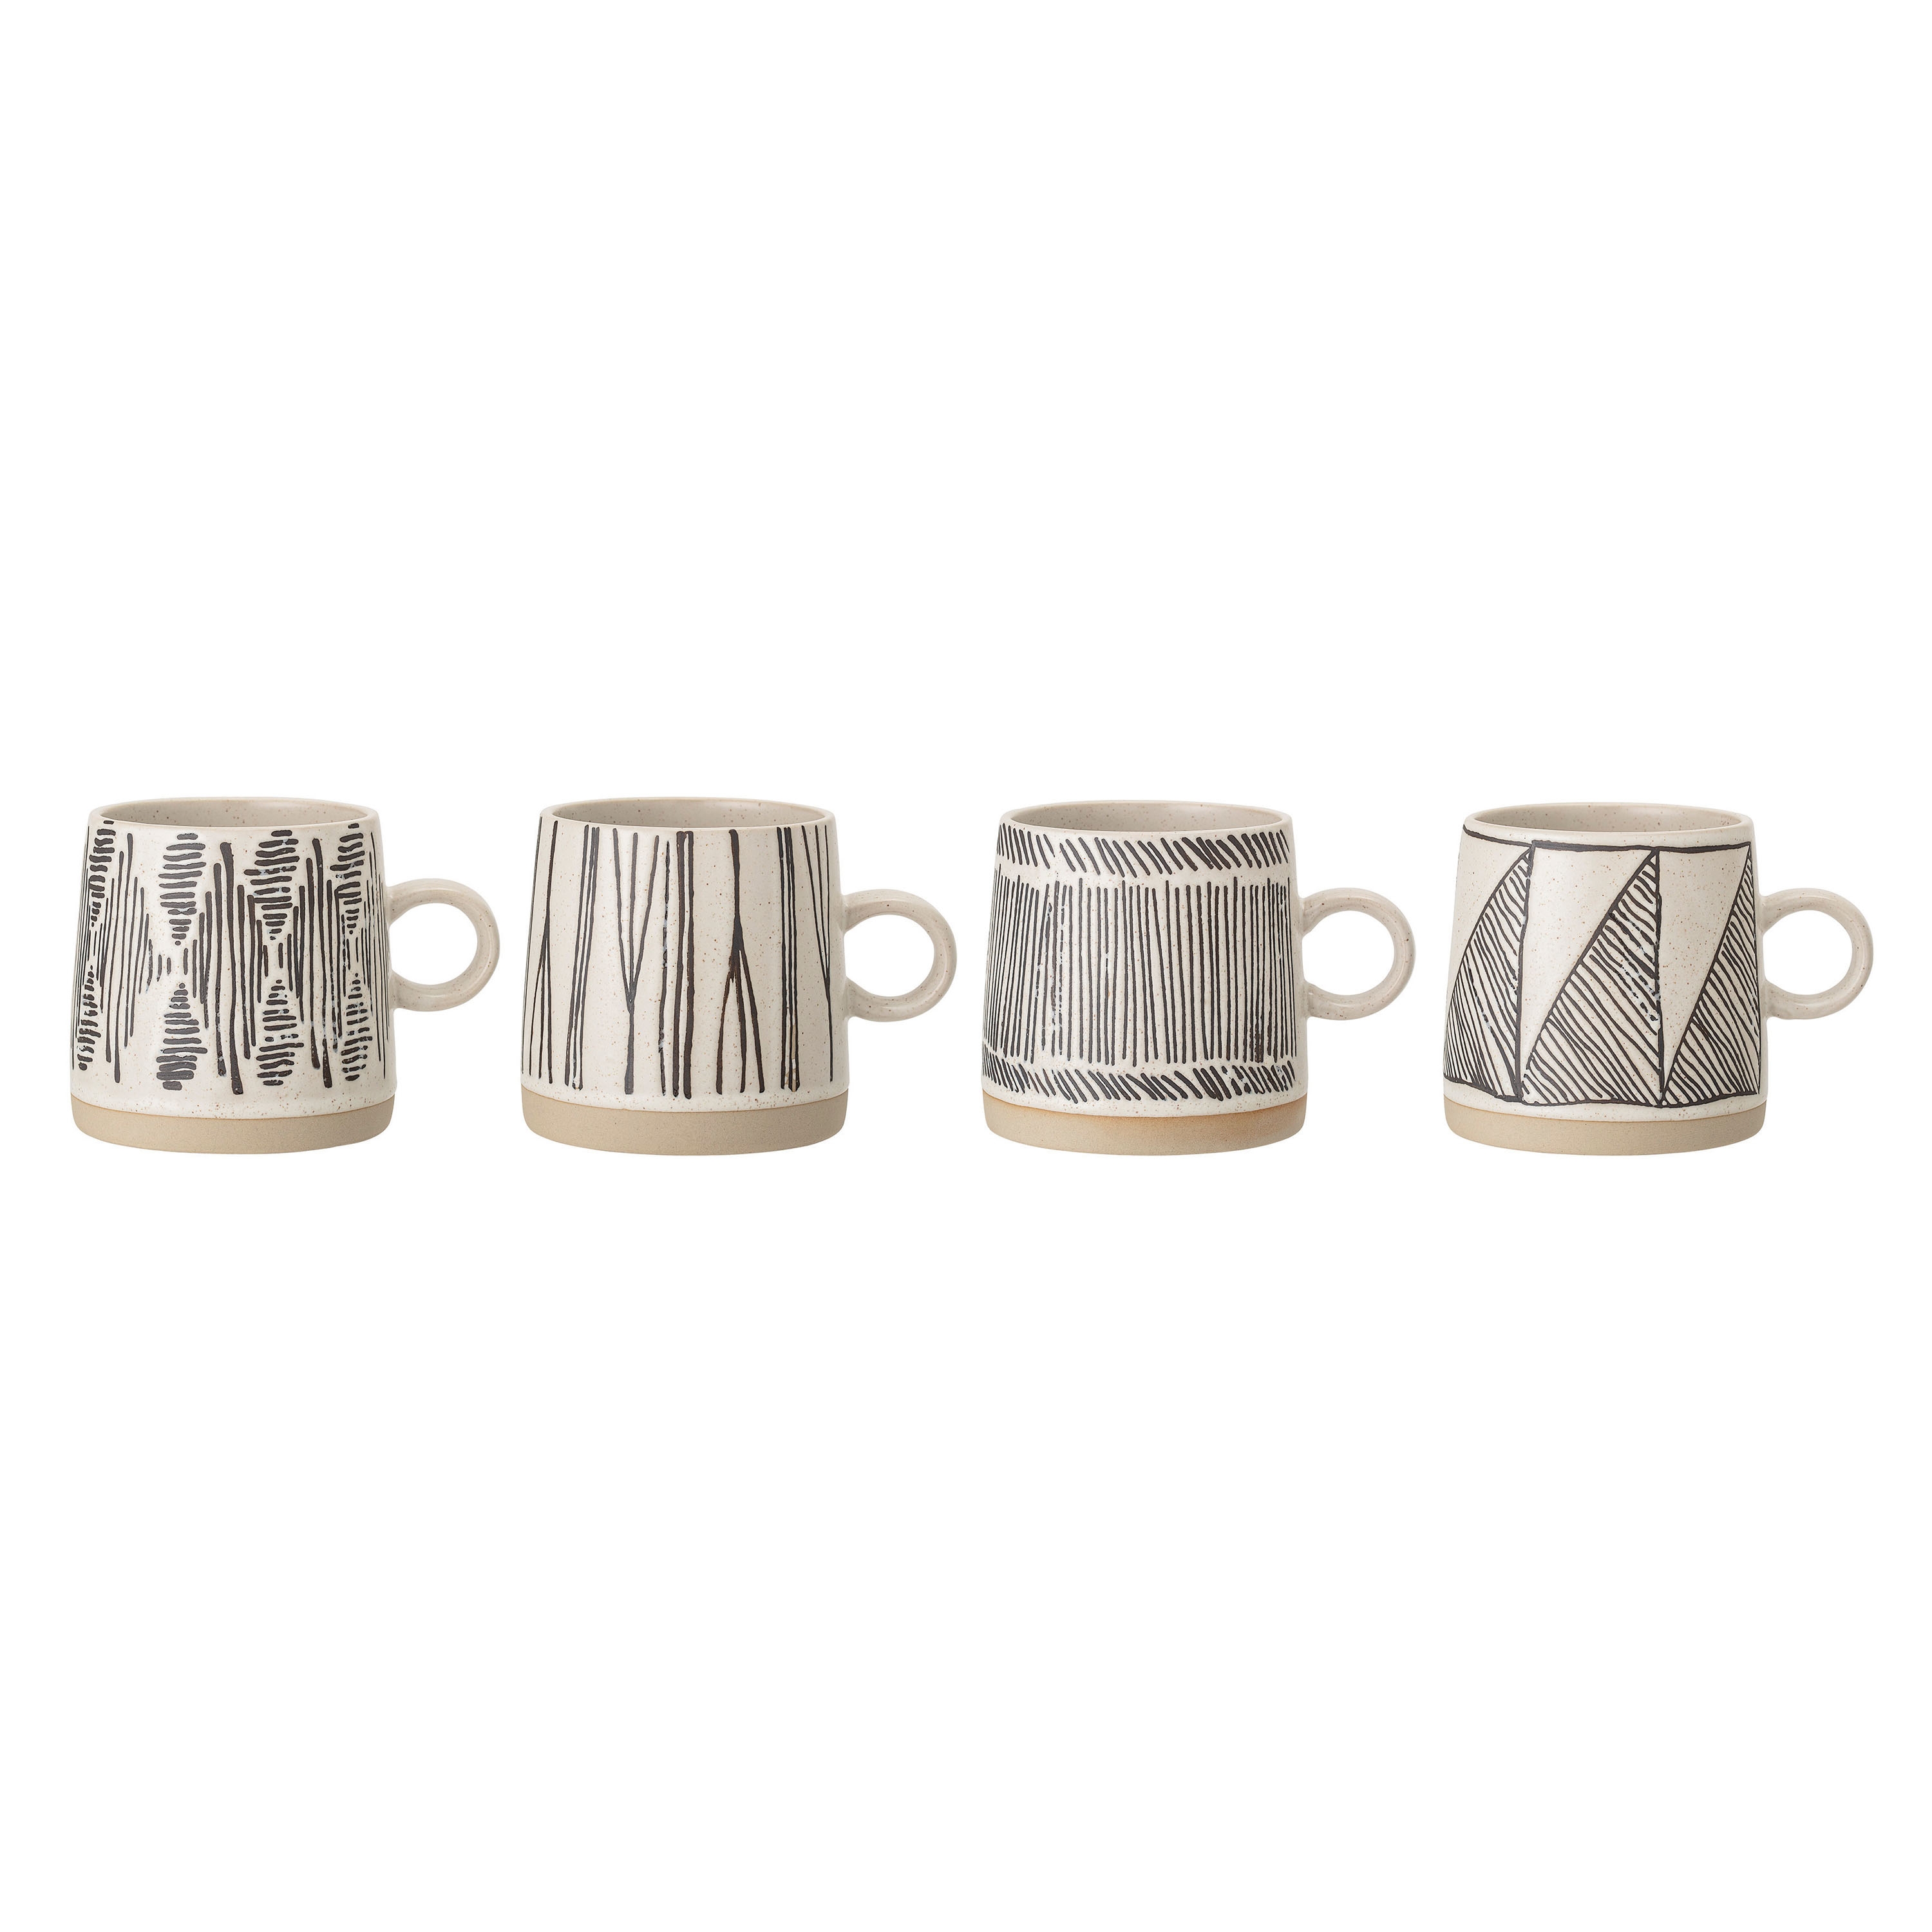 White Stoneware Mug with Embossed Black Designs (Set of 4 Styles) - Image 0